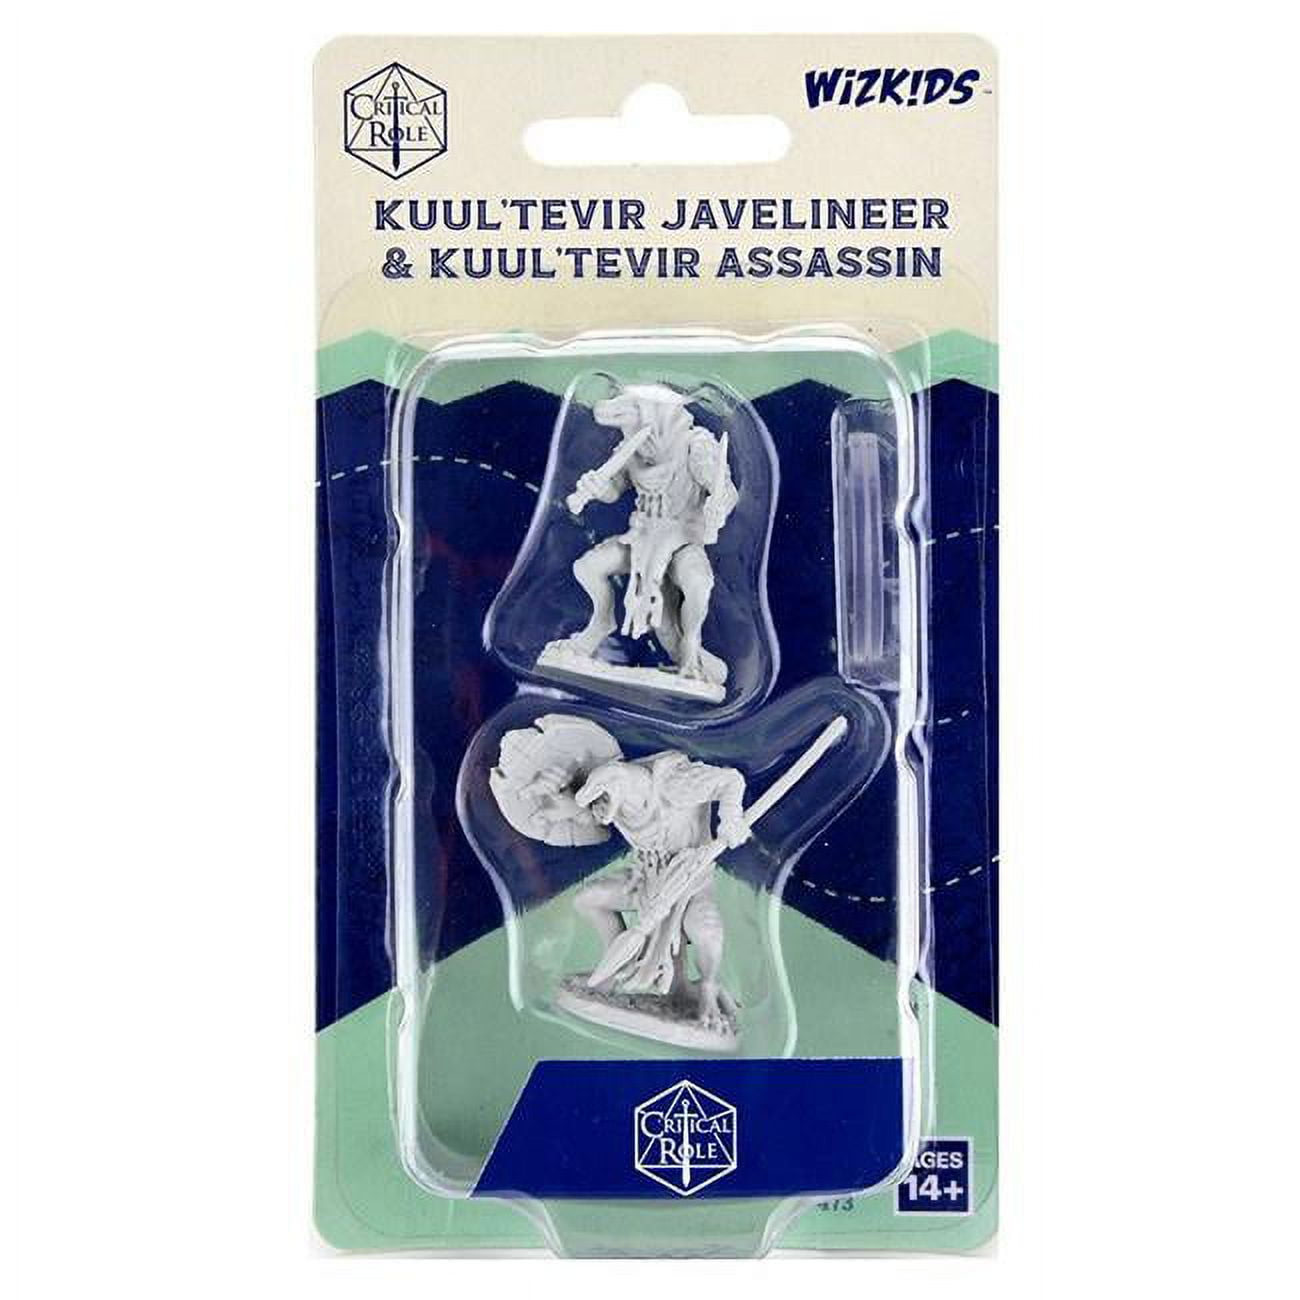 Picture of WizKids WZK90473 Critical Role Mini KJavelineer & Assassin Miniatures